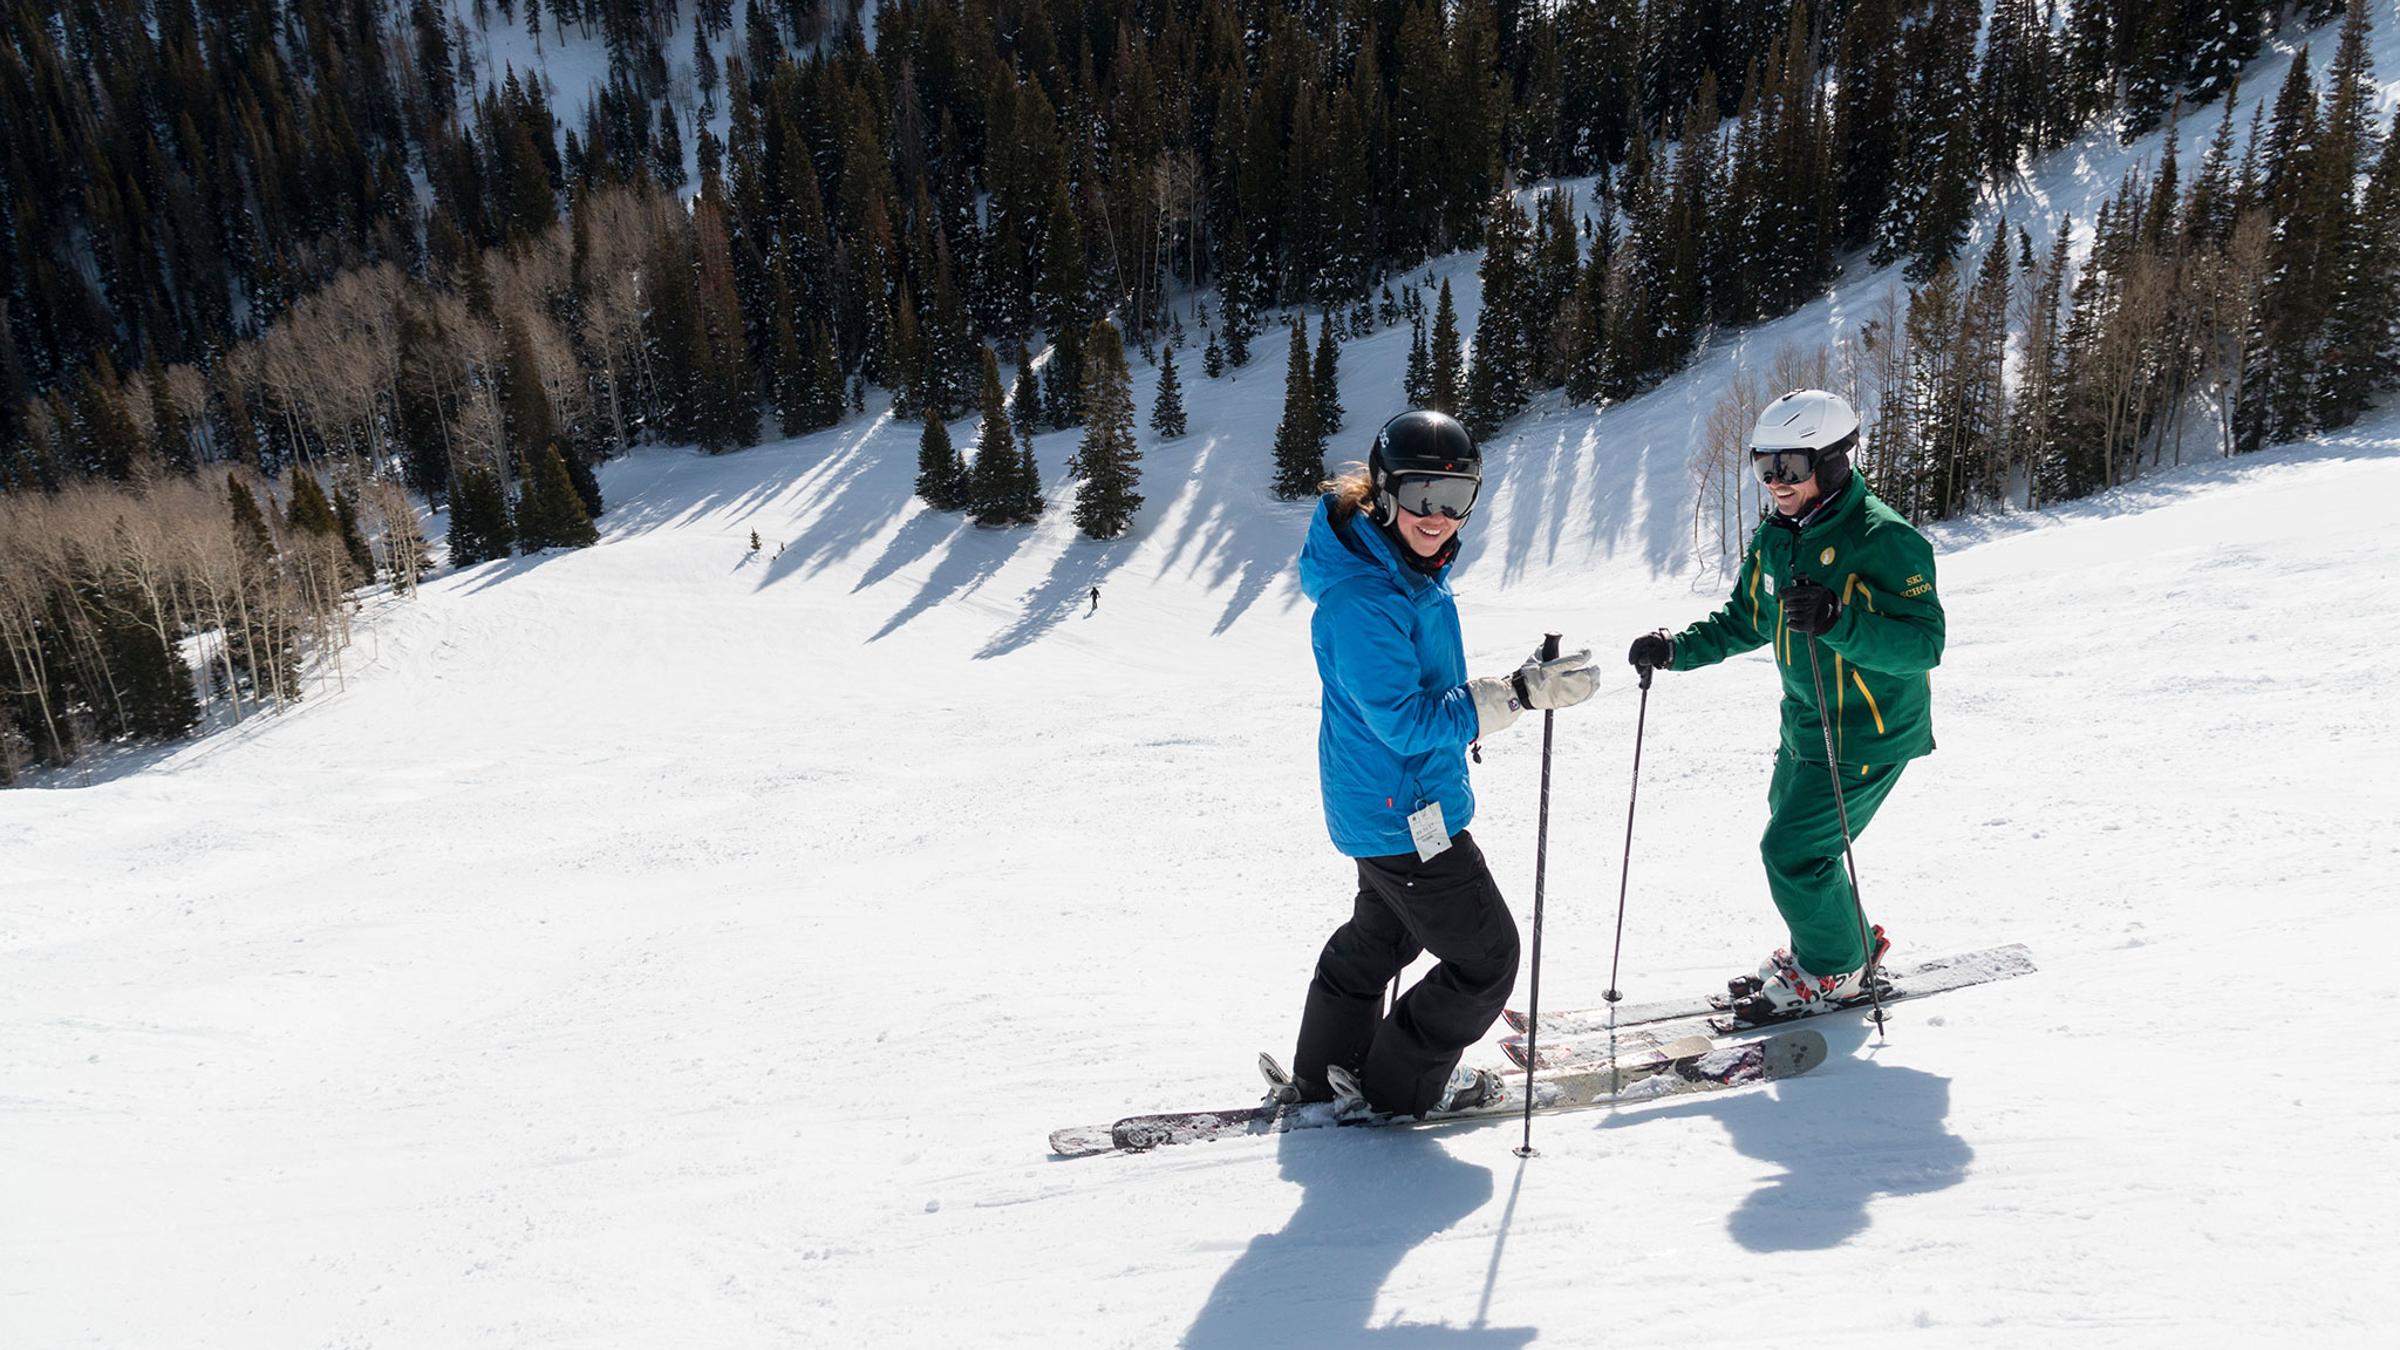 Private ski lesson at Deer Valley Resort